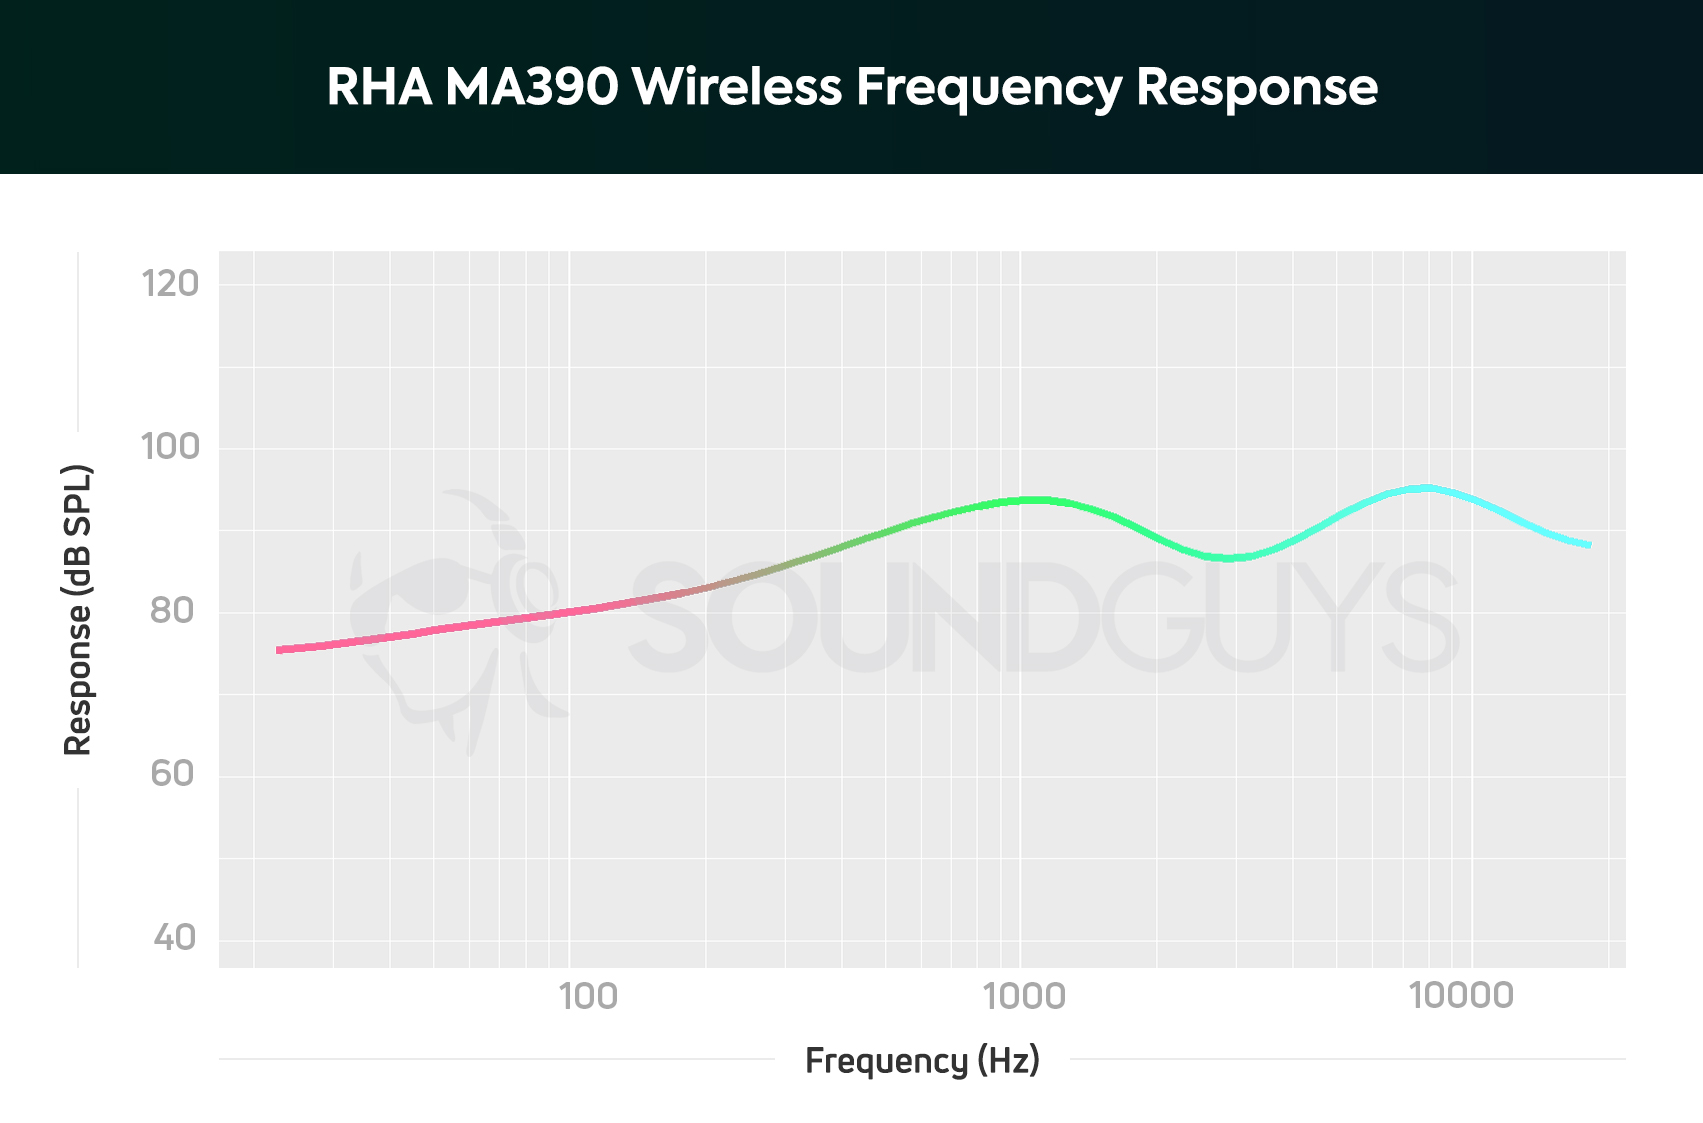 RHA MA390 Wireless: A chart depicting the frequency response of the RHA MA390 Wireless earphones.